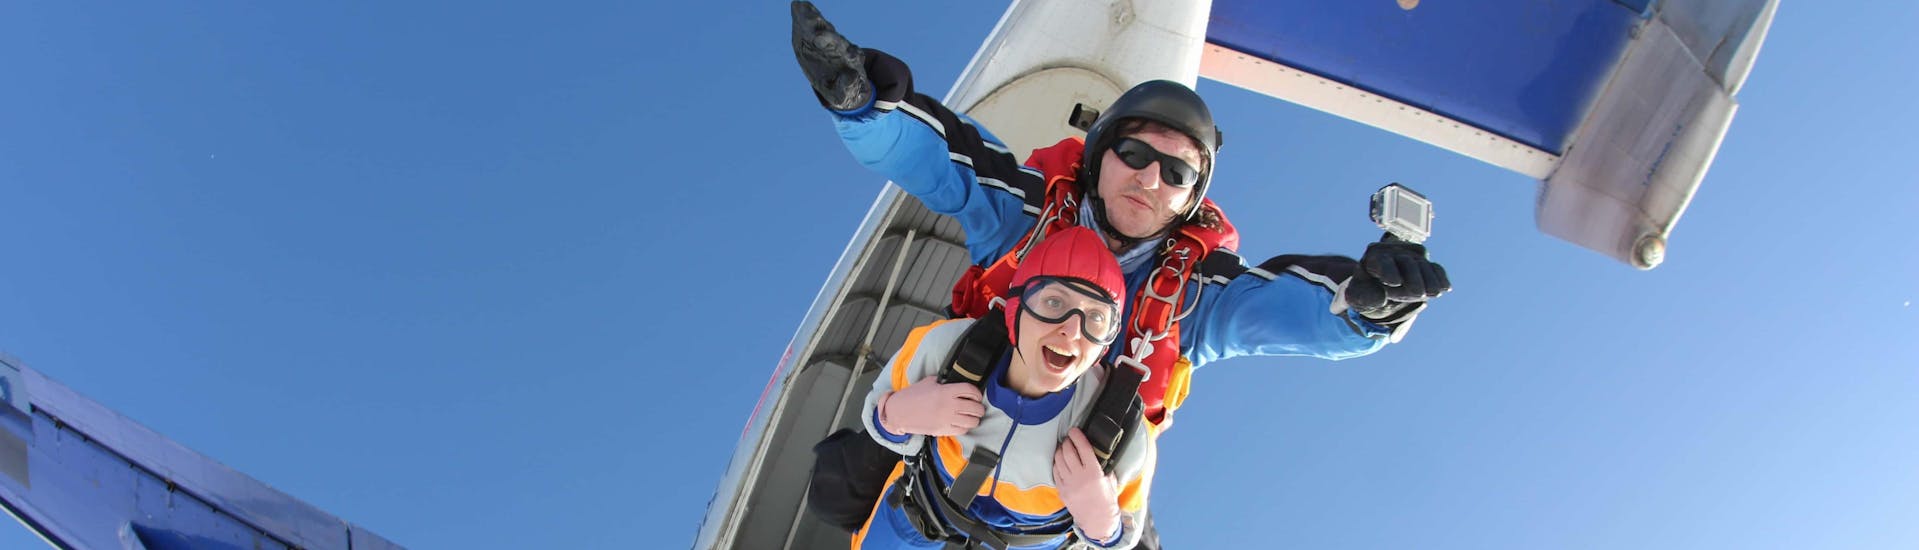 Skydiving (c) Shutterstock